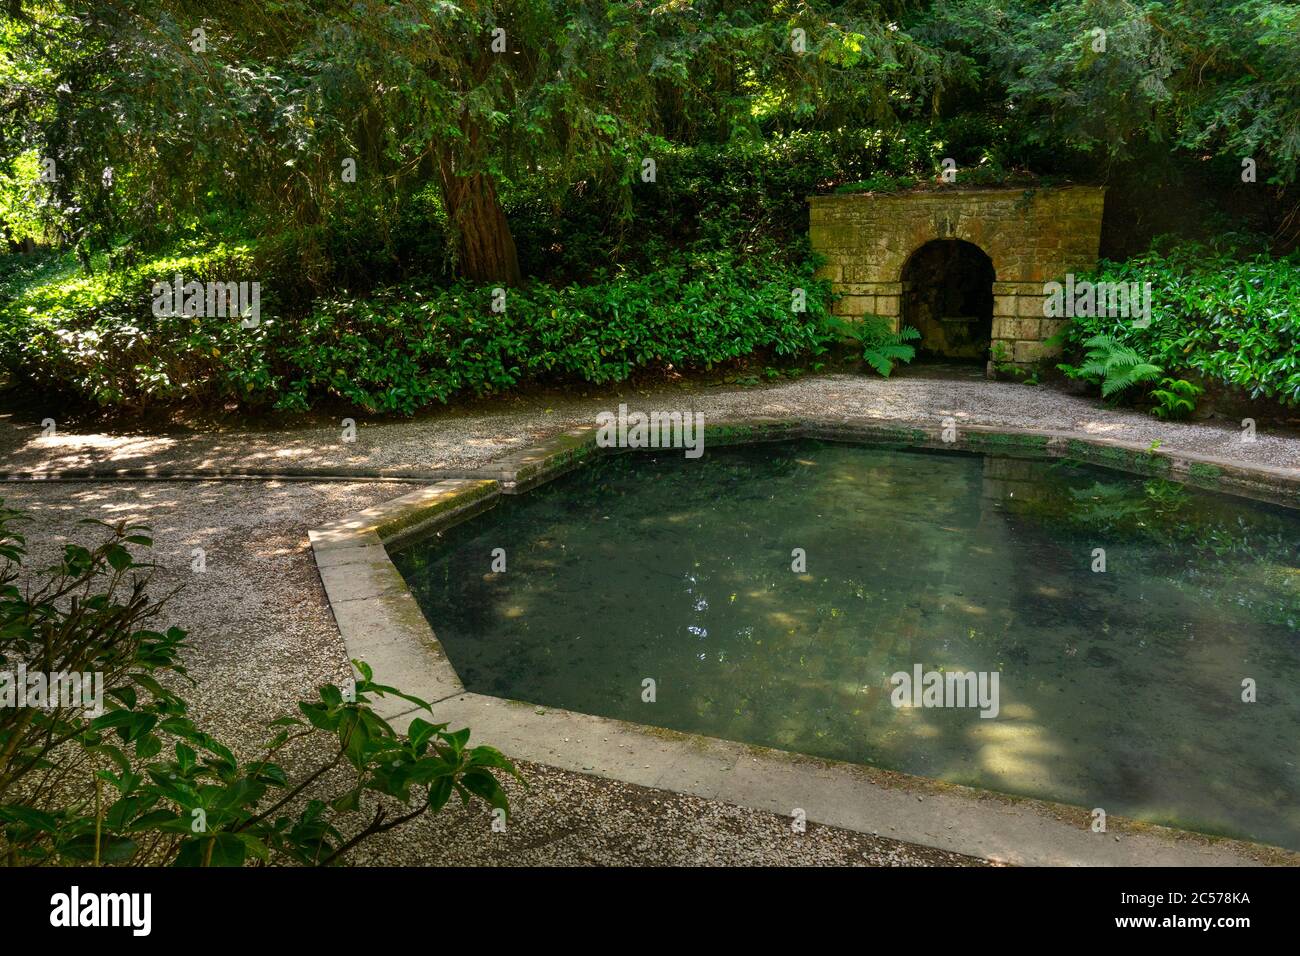 Rousham House and Gardens, Oxfordshire, England Stockfoto